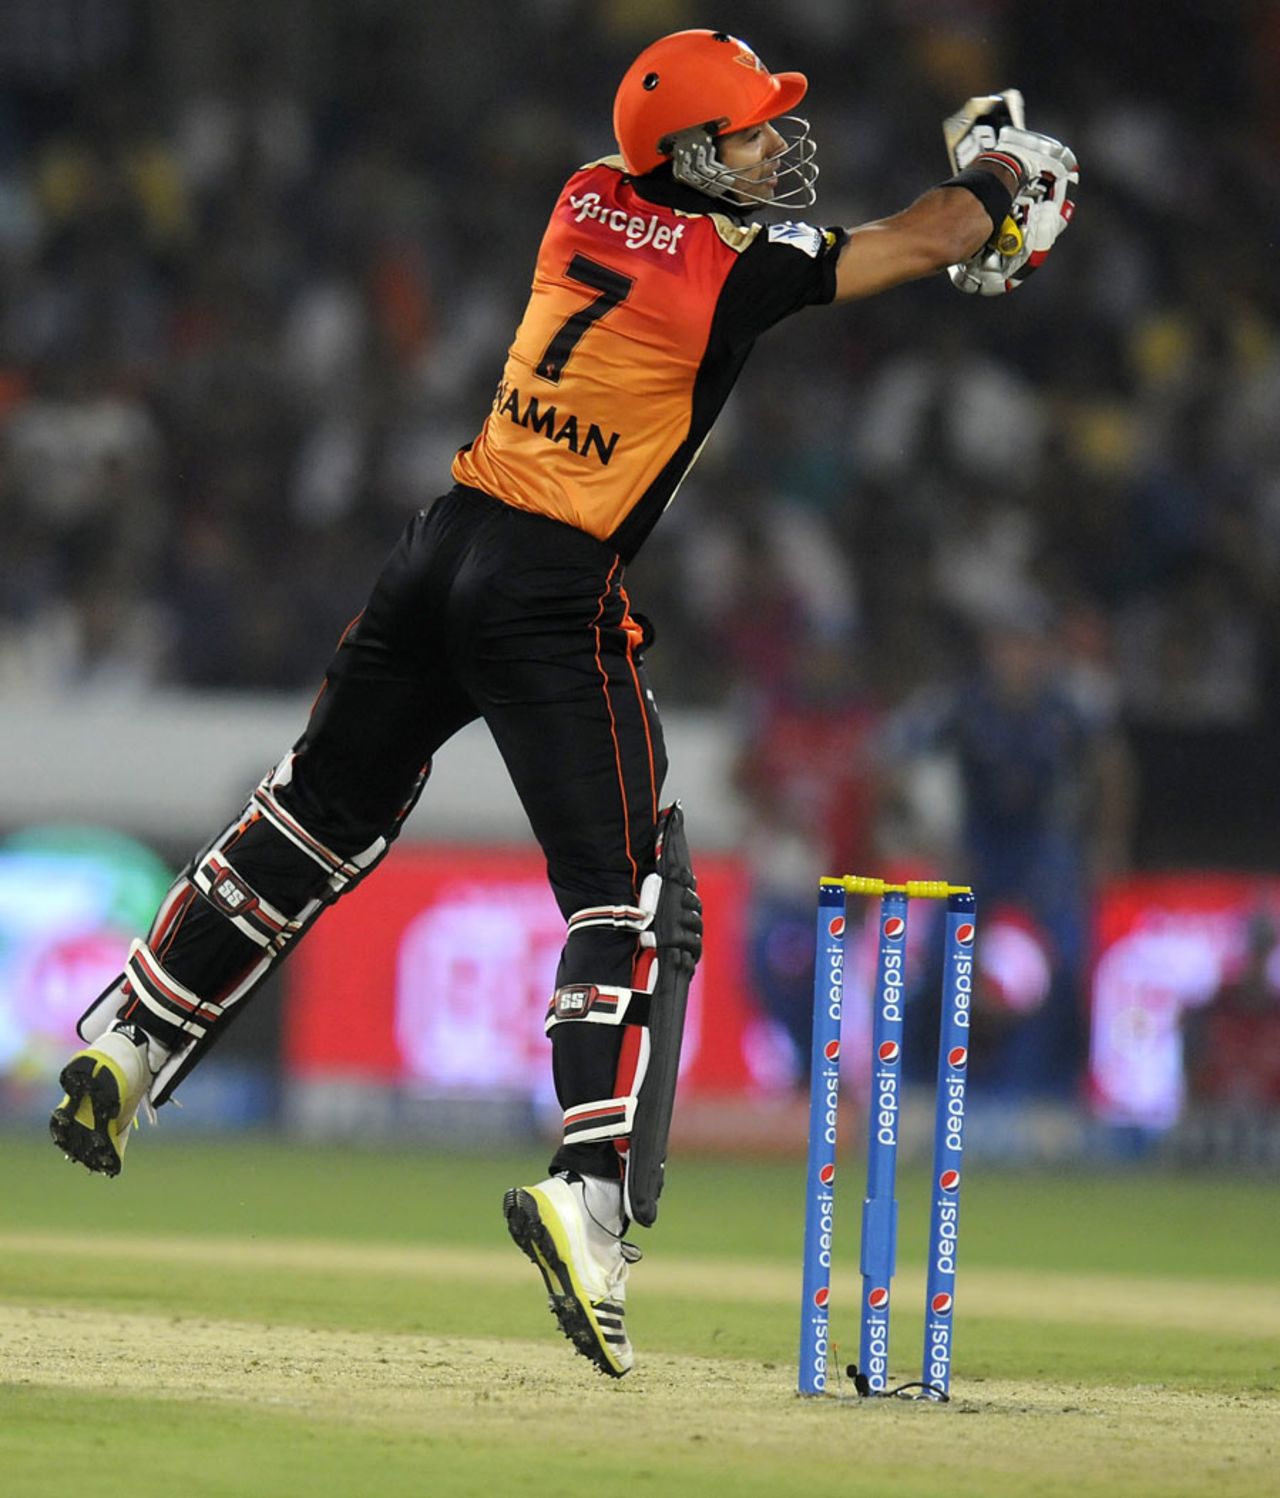 Naman Ojha tries to have a swing at the ball, Sunrisers Hyderabad v Mumbai Indians, IPL 2014, Hyderabad, May 12, 2014